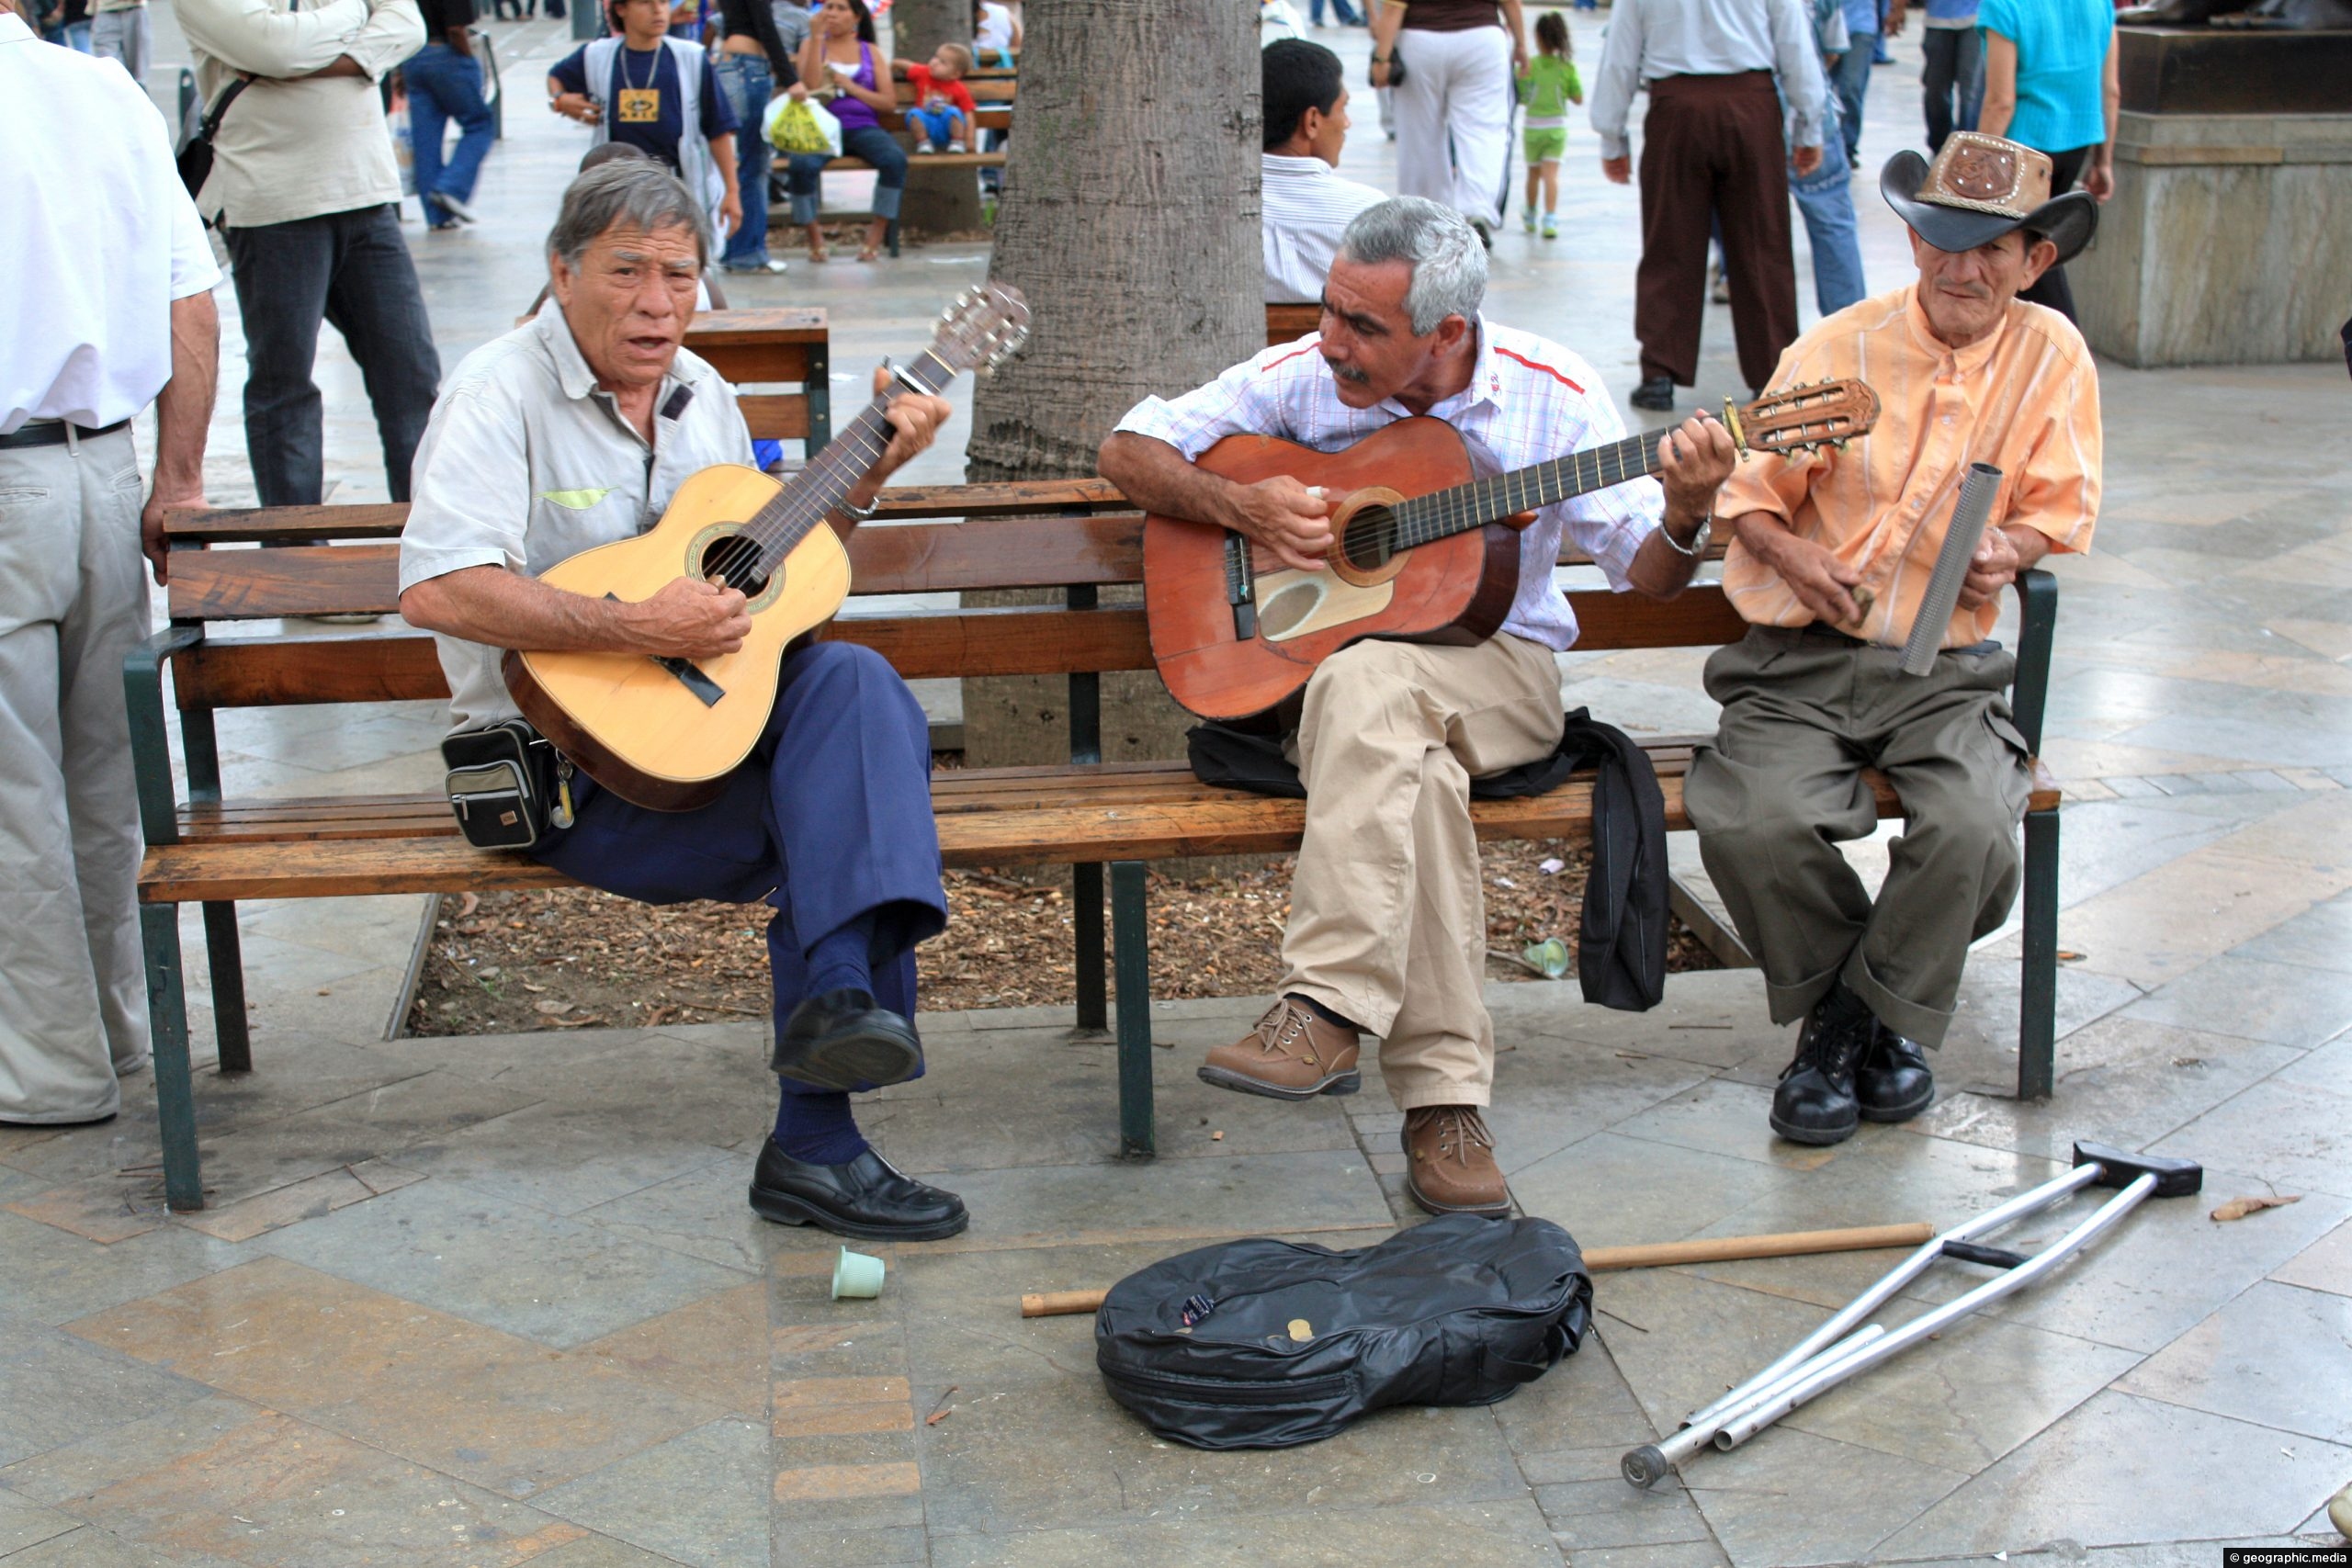 Paisa Musicians in Medellin